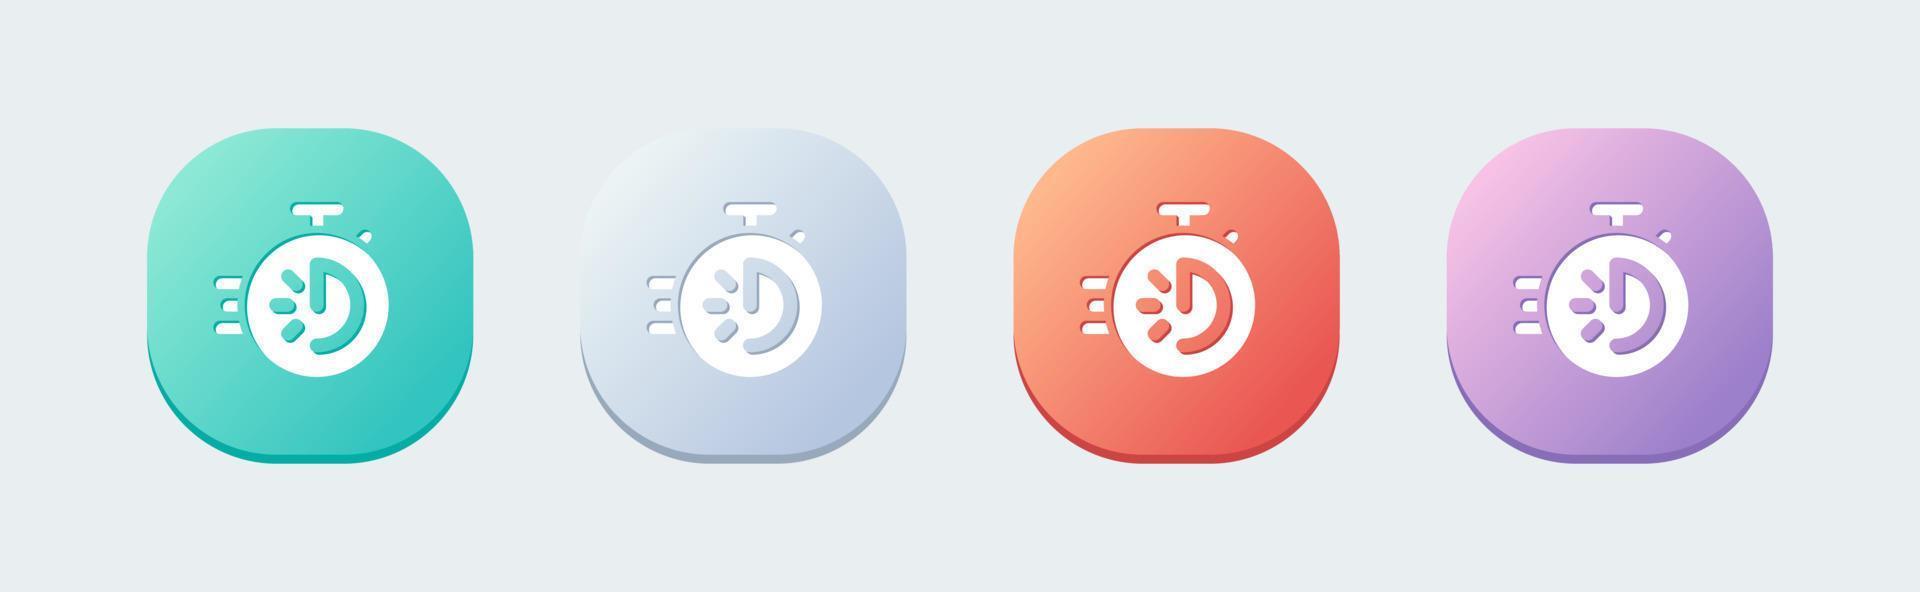 stoppur fast ikon i platt design stil. hastighet timer tecken vektor illustration.